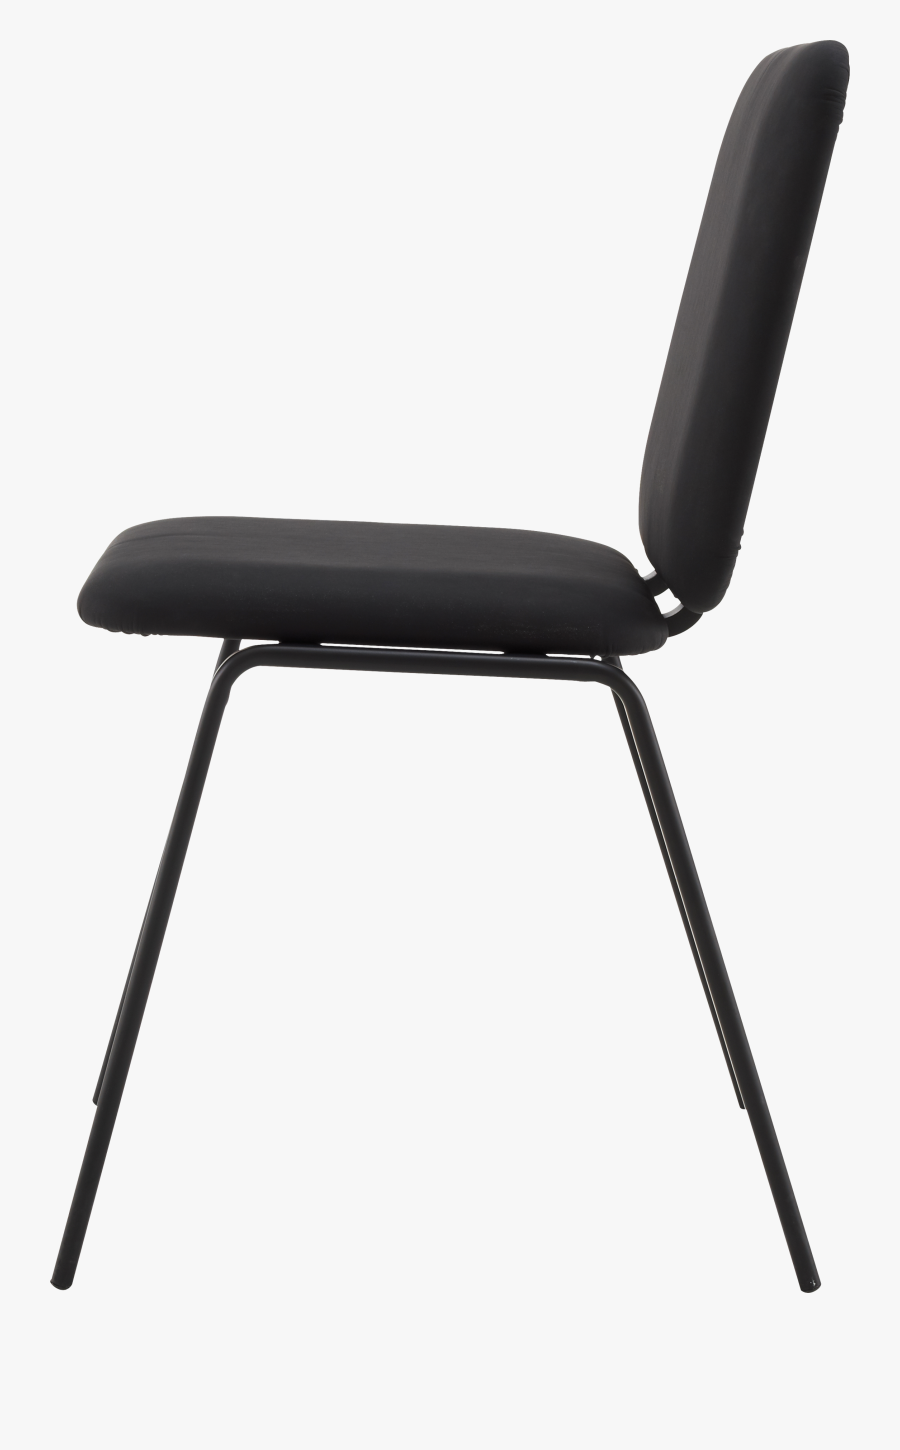 Chair Clipart Side View - Black Chair Transparent Background, Transparent Clipart